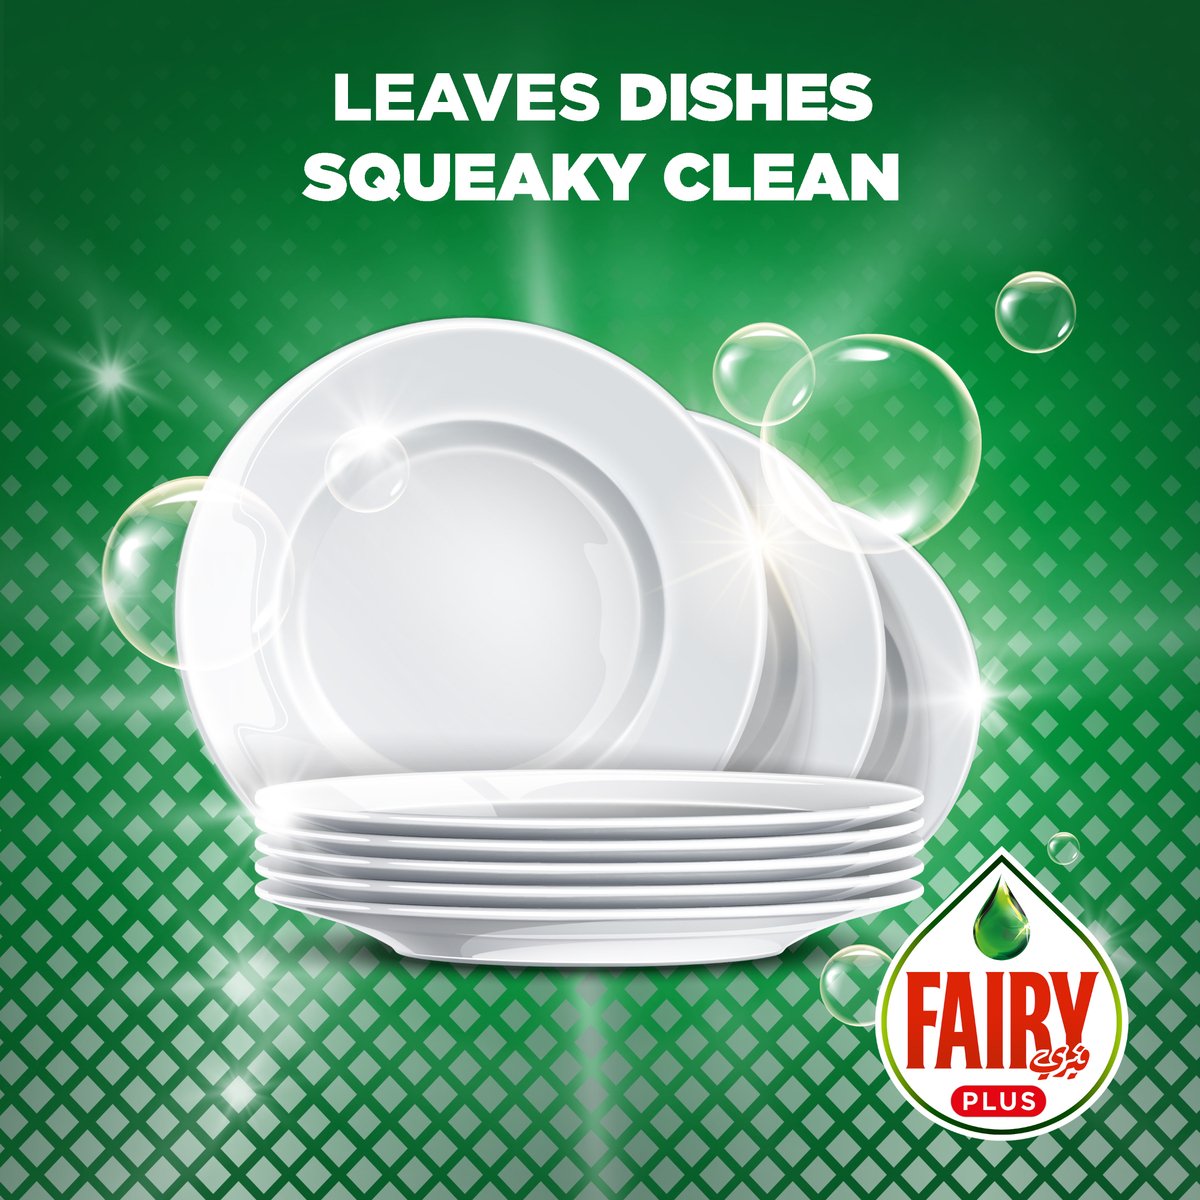 Fairy Plus Antibacterial Dishwashing Liquid Soap With Alternative Power To Bleach 2 x 800ml